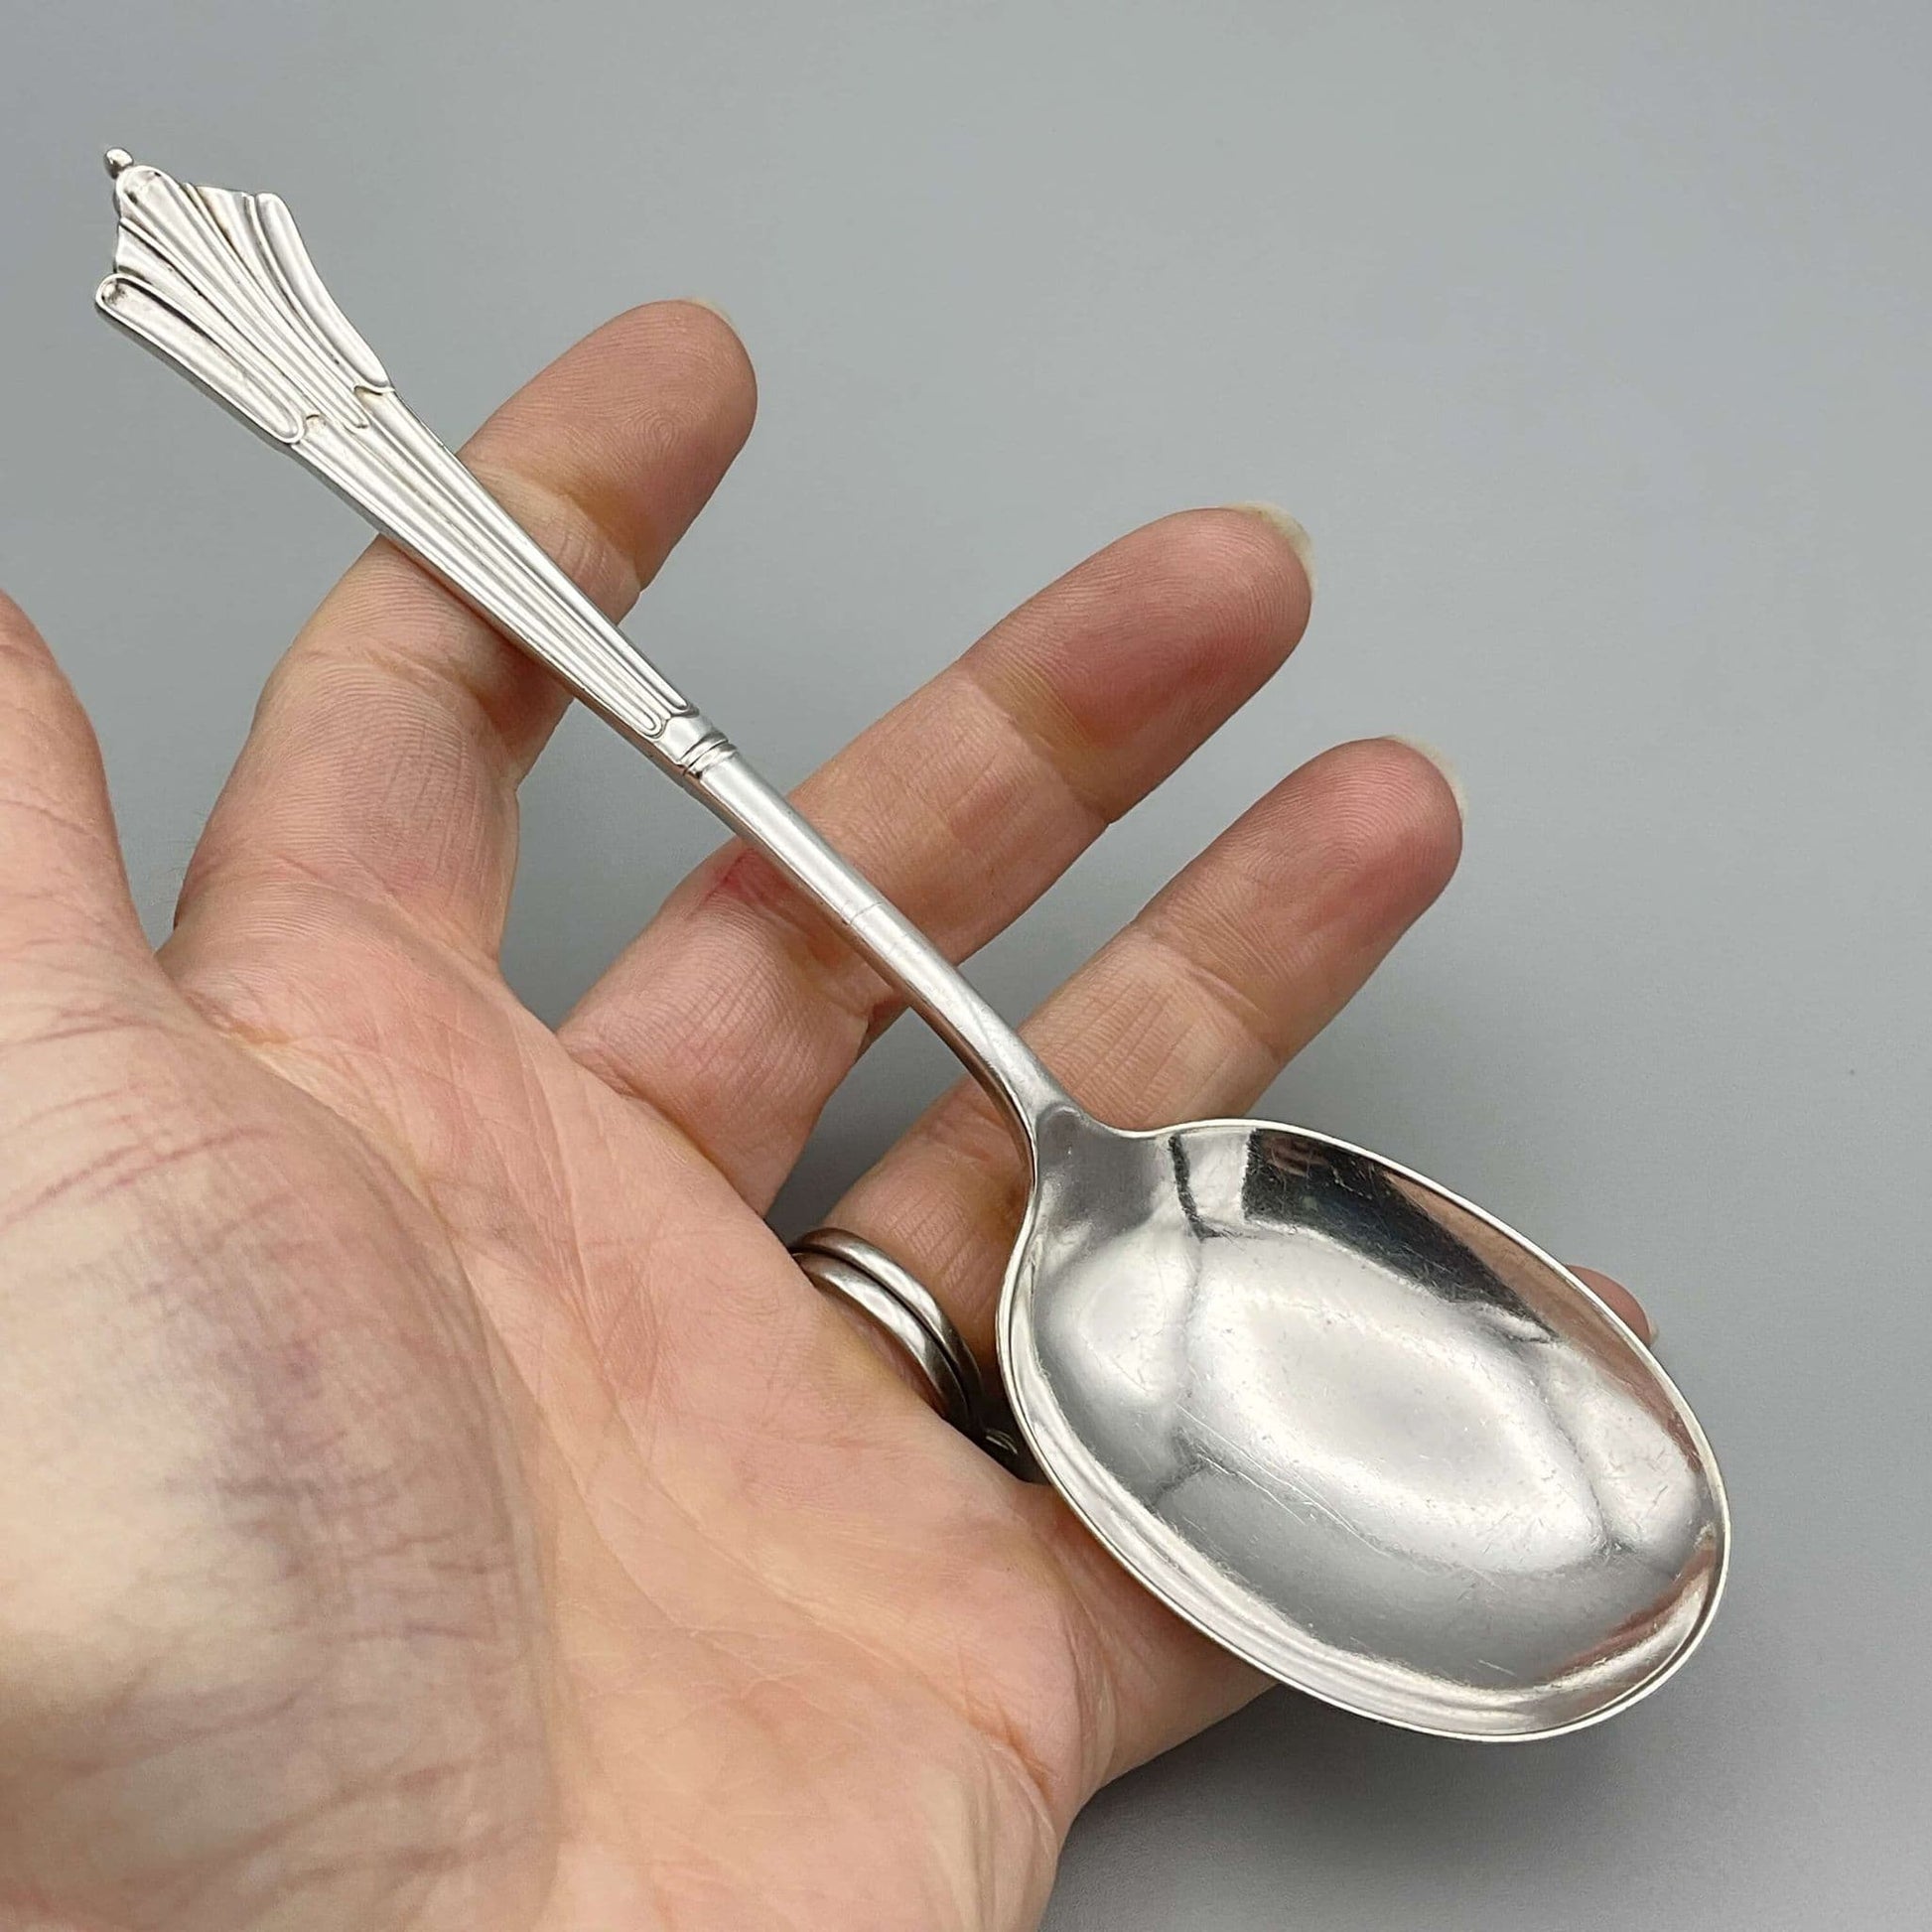 Beautiful 1940s Art Deco Dessert Spoon held in a hand